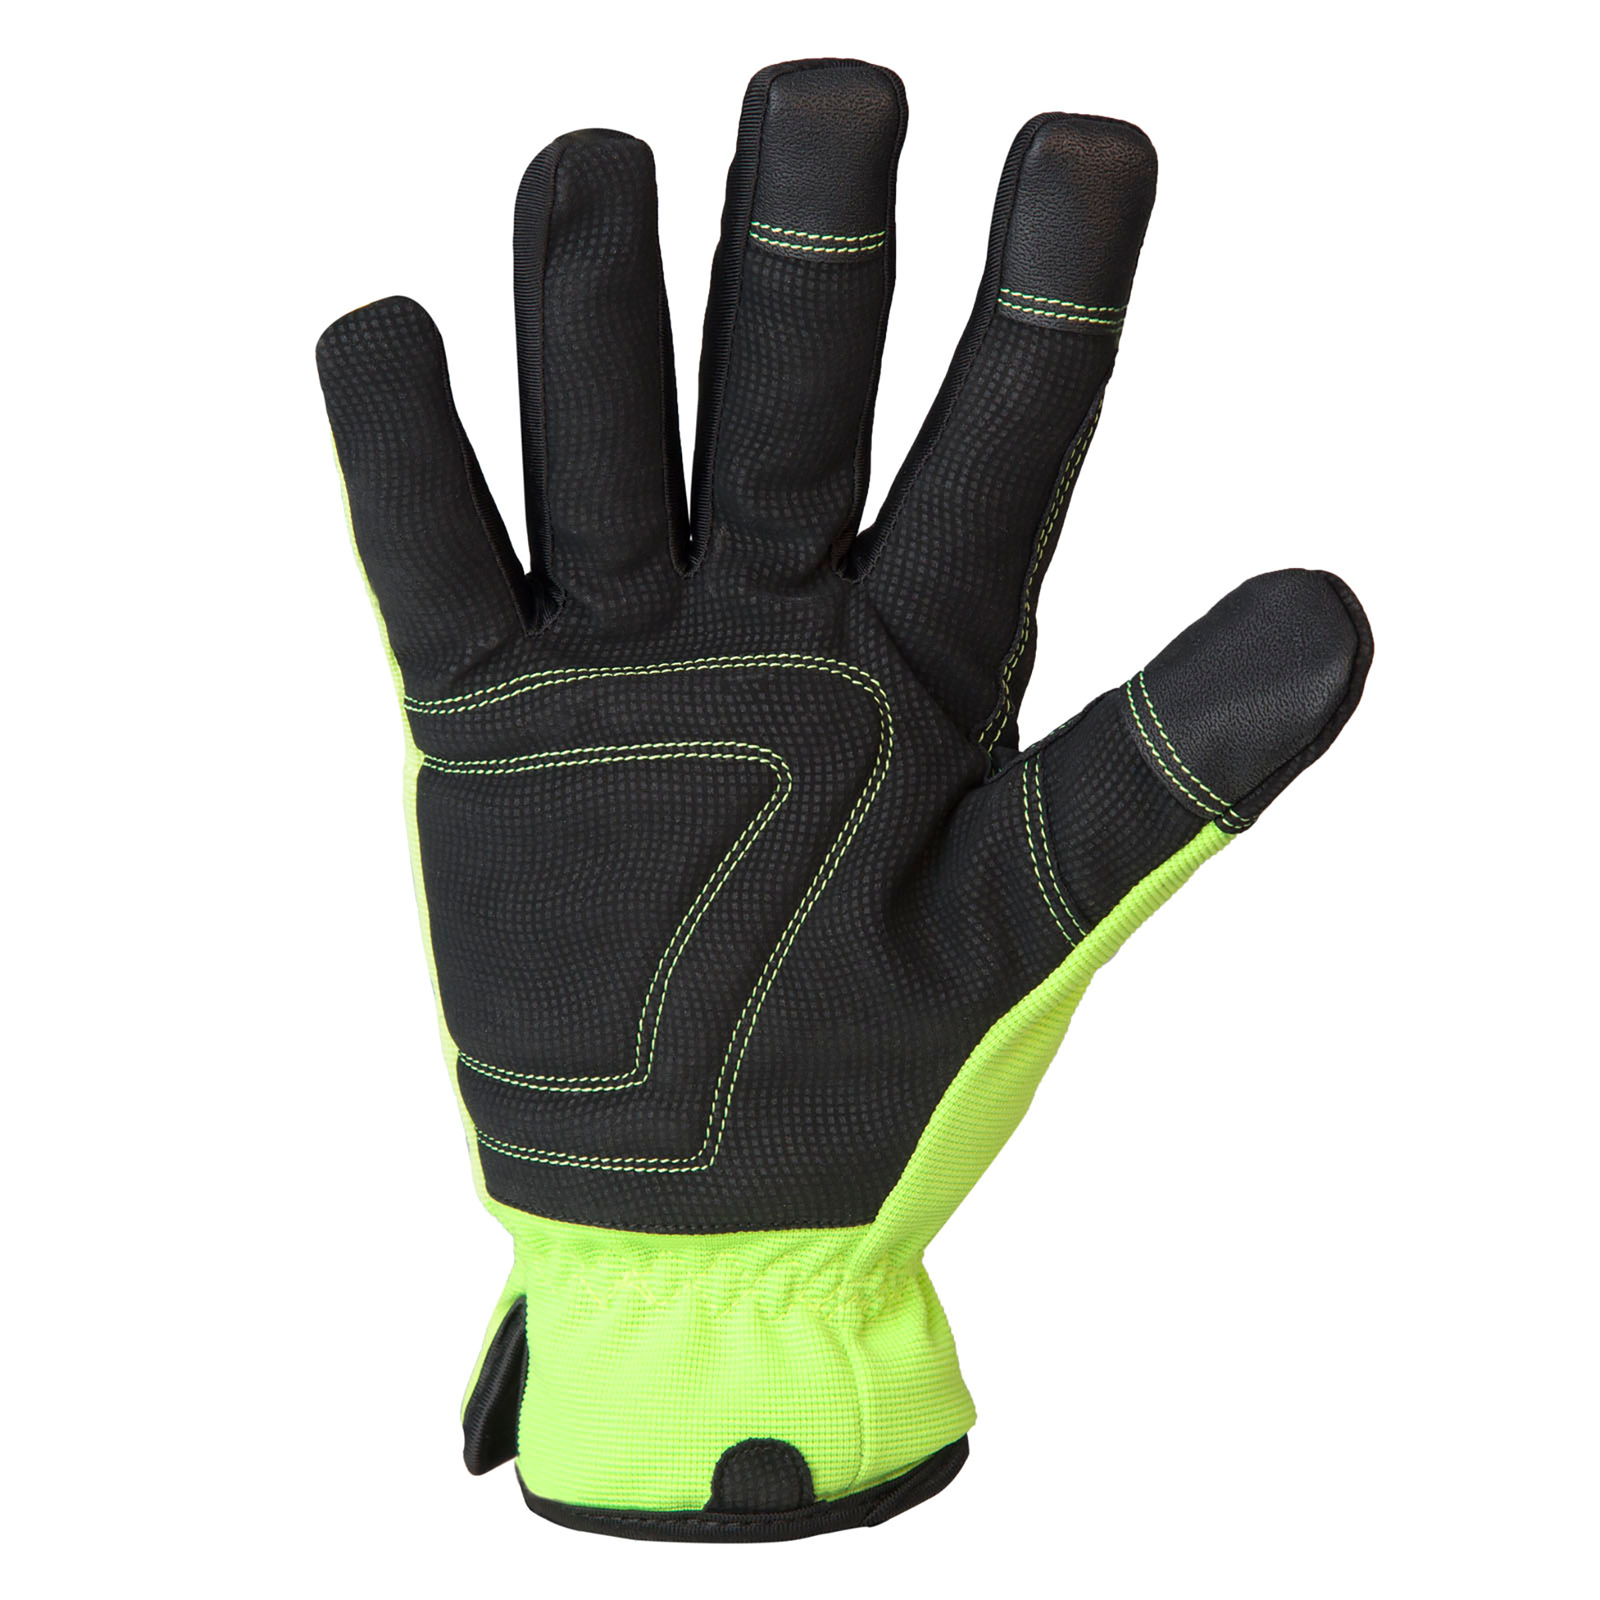 Black palm of hi-vis touchscreen JORESTECH safety work gloves with fleece lining